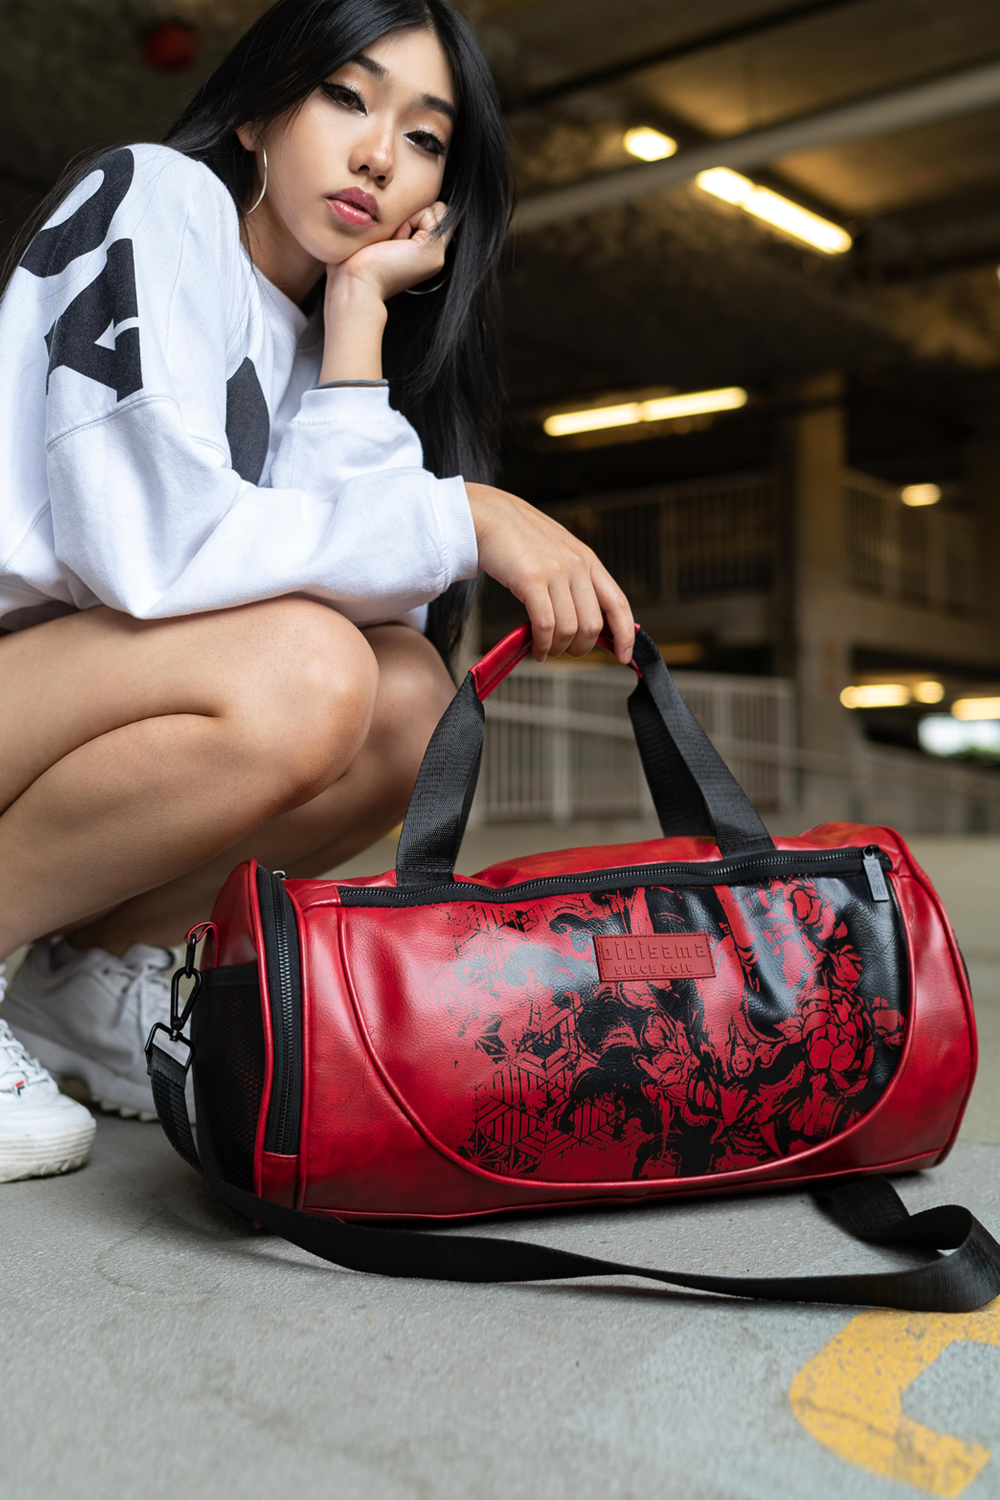 Customized Duffle Bag – Treasured Designs by Tonya